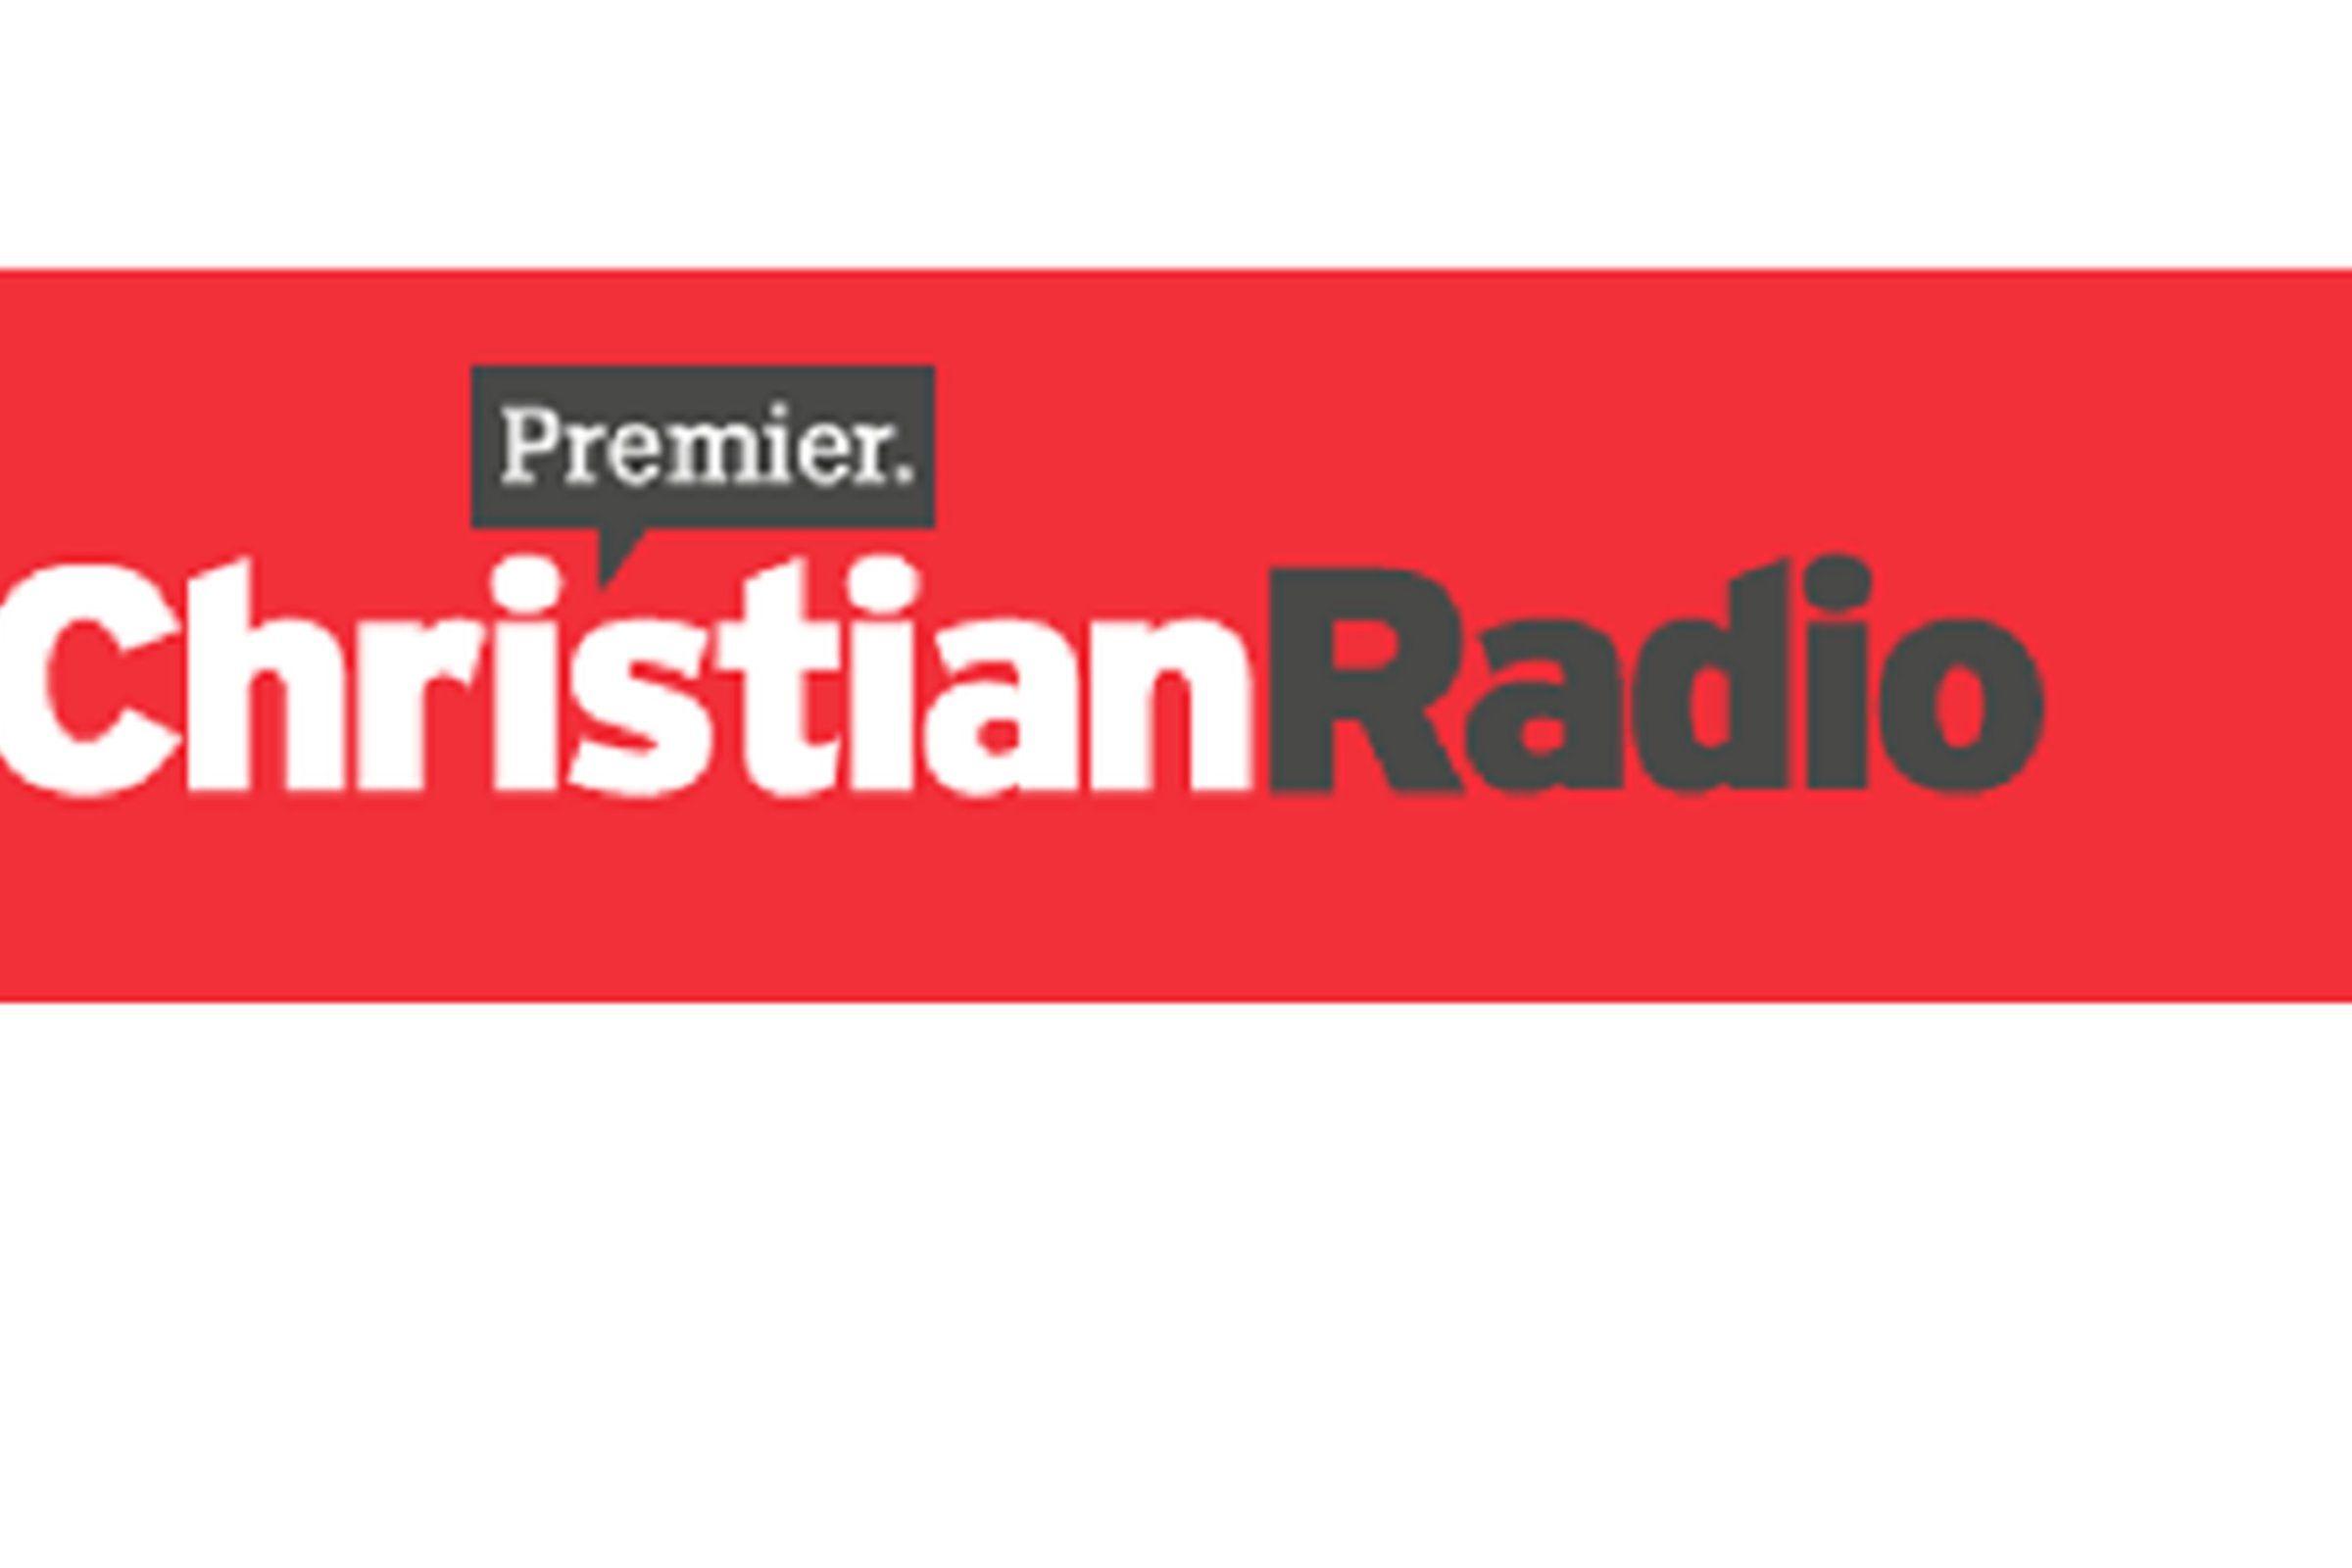 Christian Radio Logo - Premier Christian Radio: The News Hour Think Tank